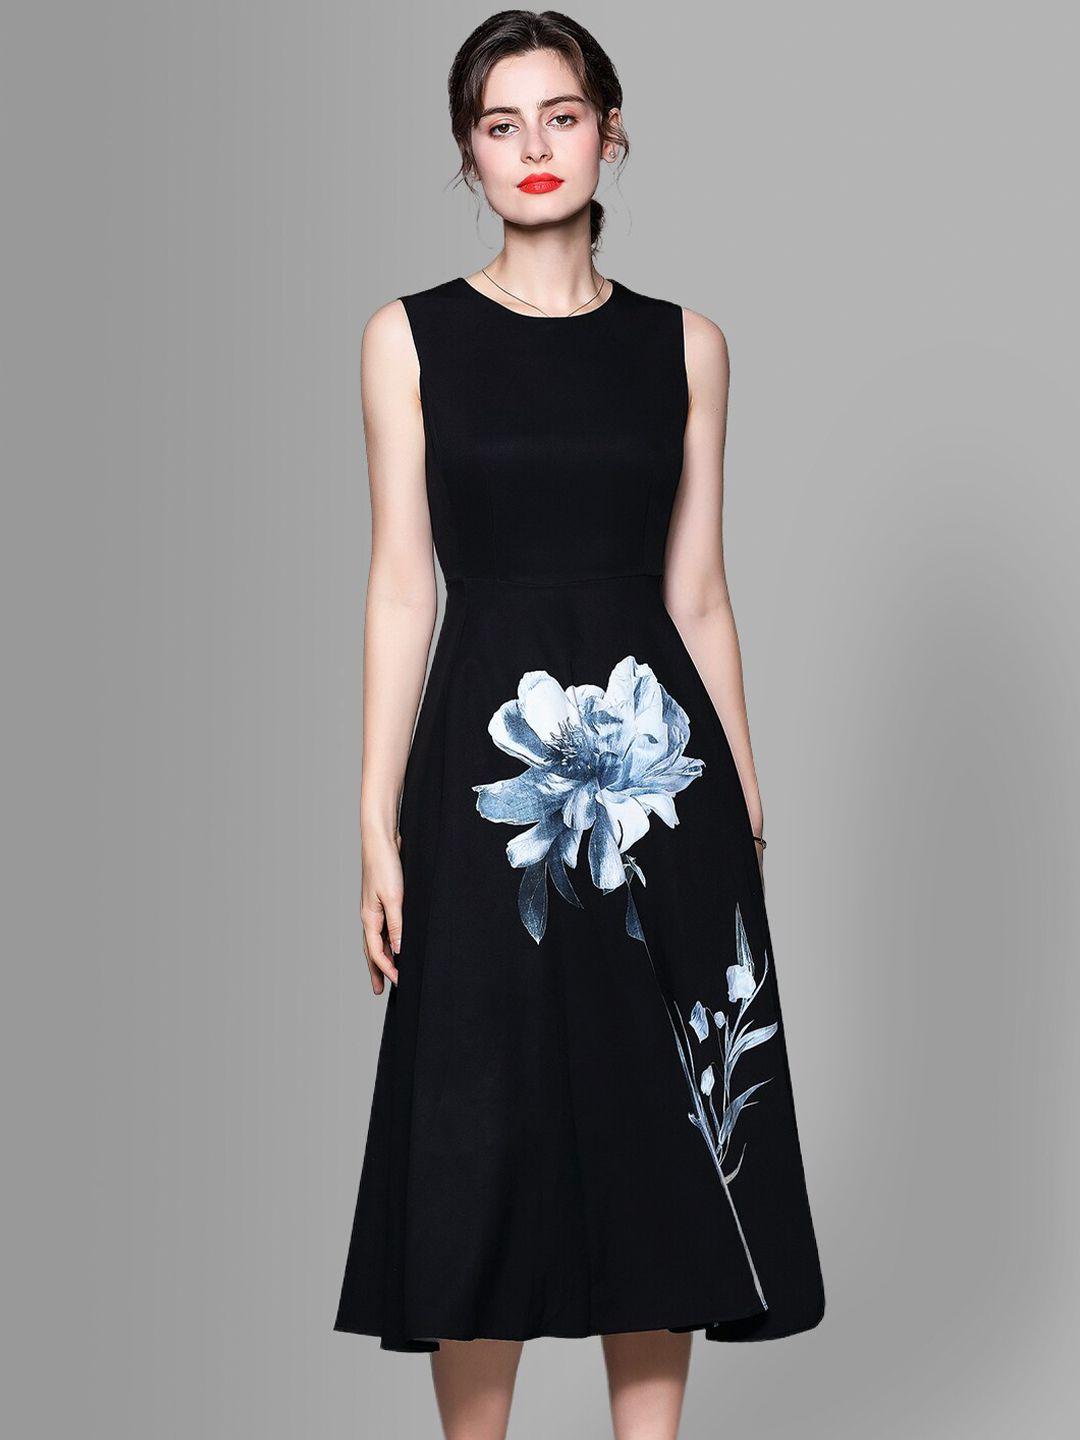 jc collection women black floral printed midi dress